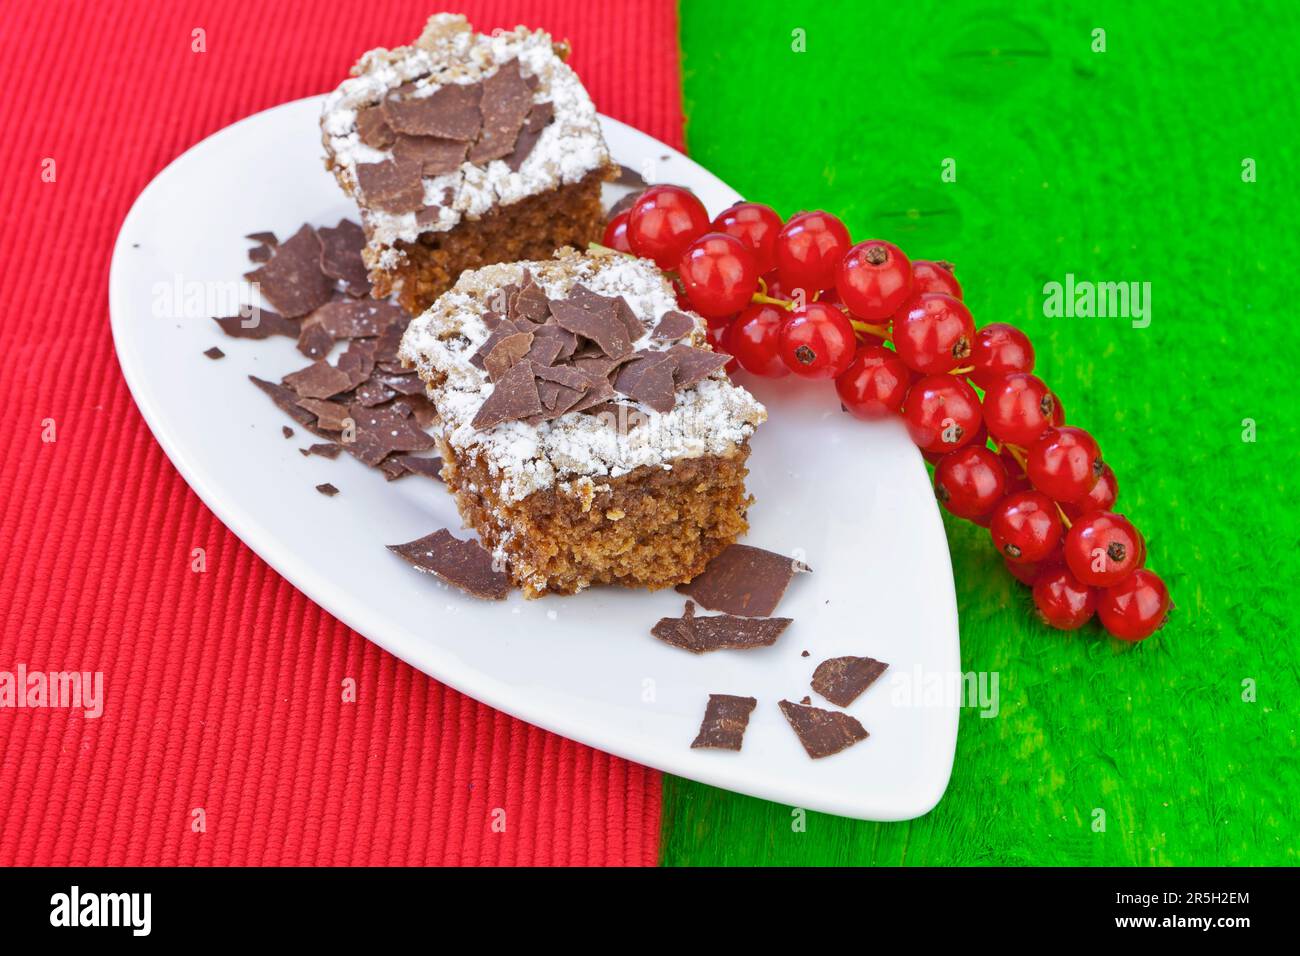 Chocolate cake, icing sugar, chocolate shavings, plate Stock Photo